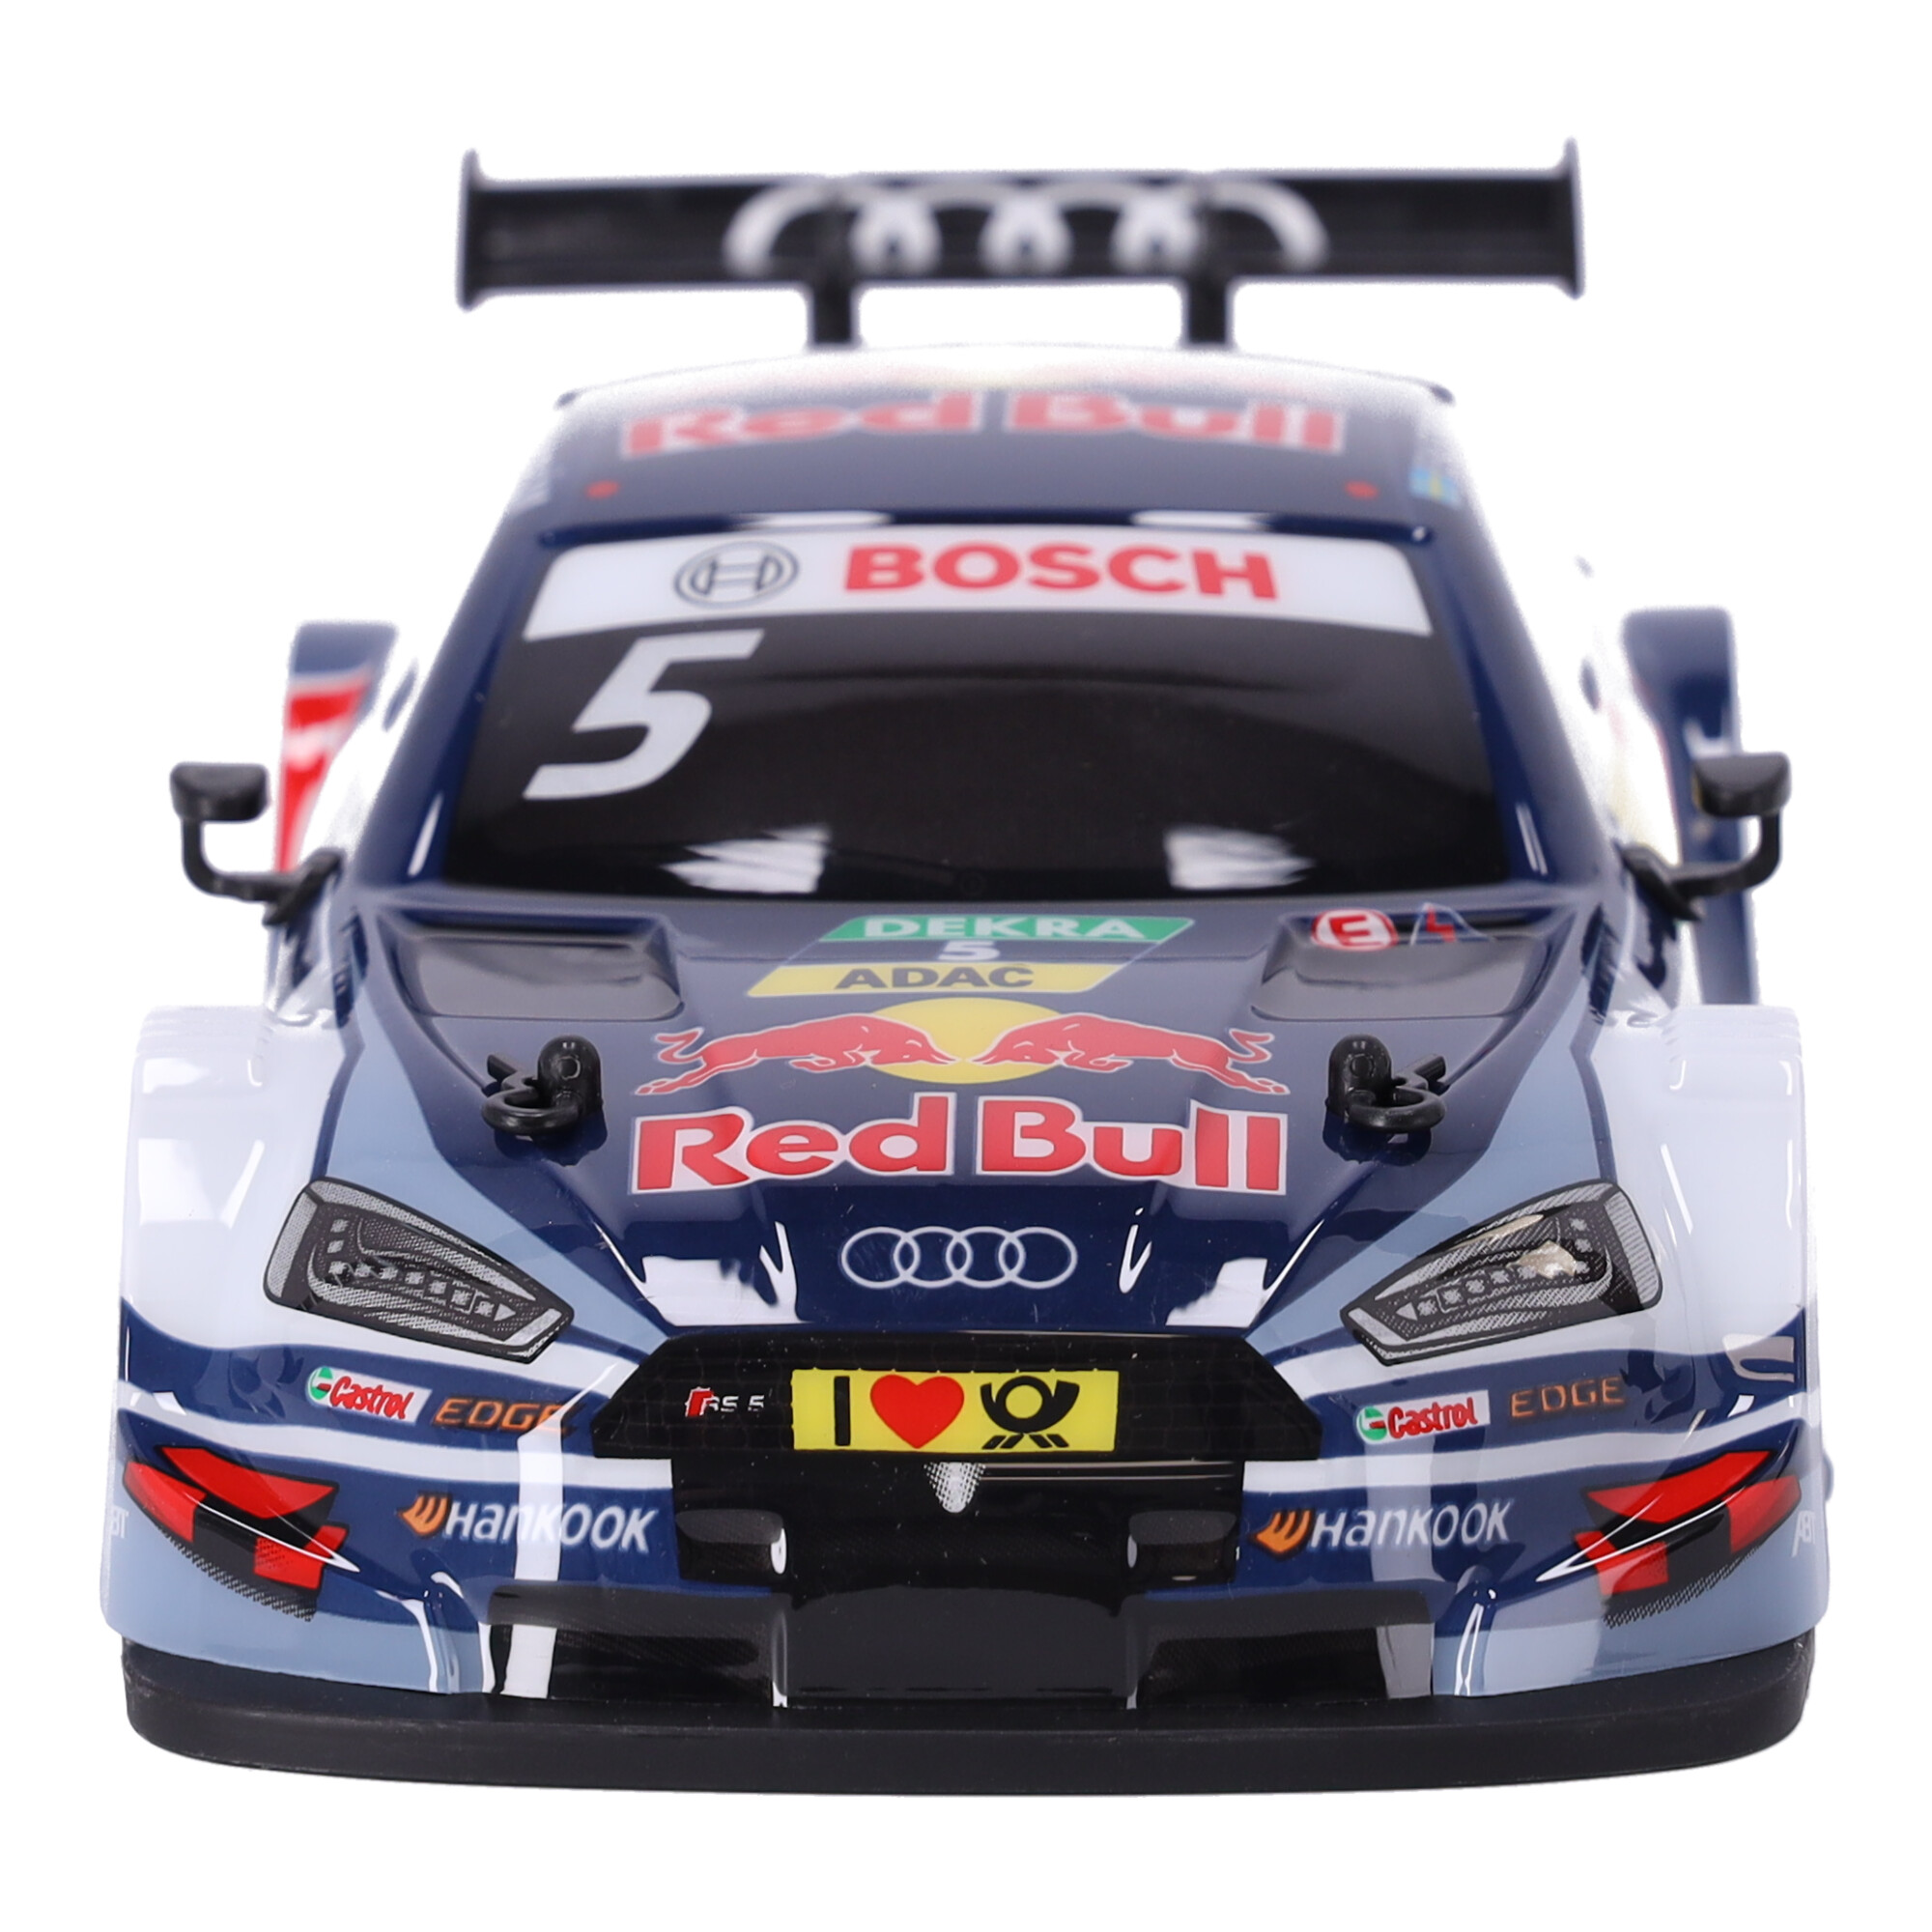 Audi Red Bull Racing radiocommandée 1:16ème